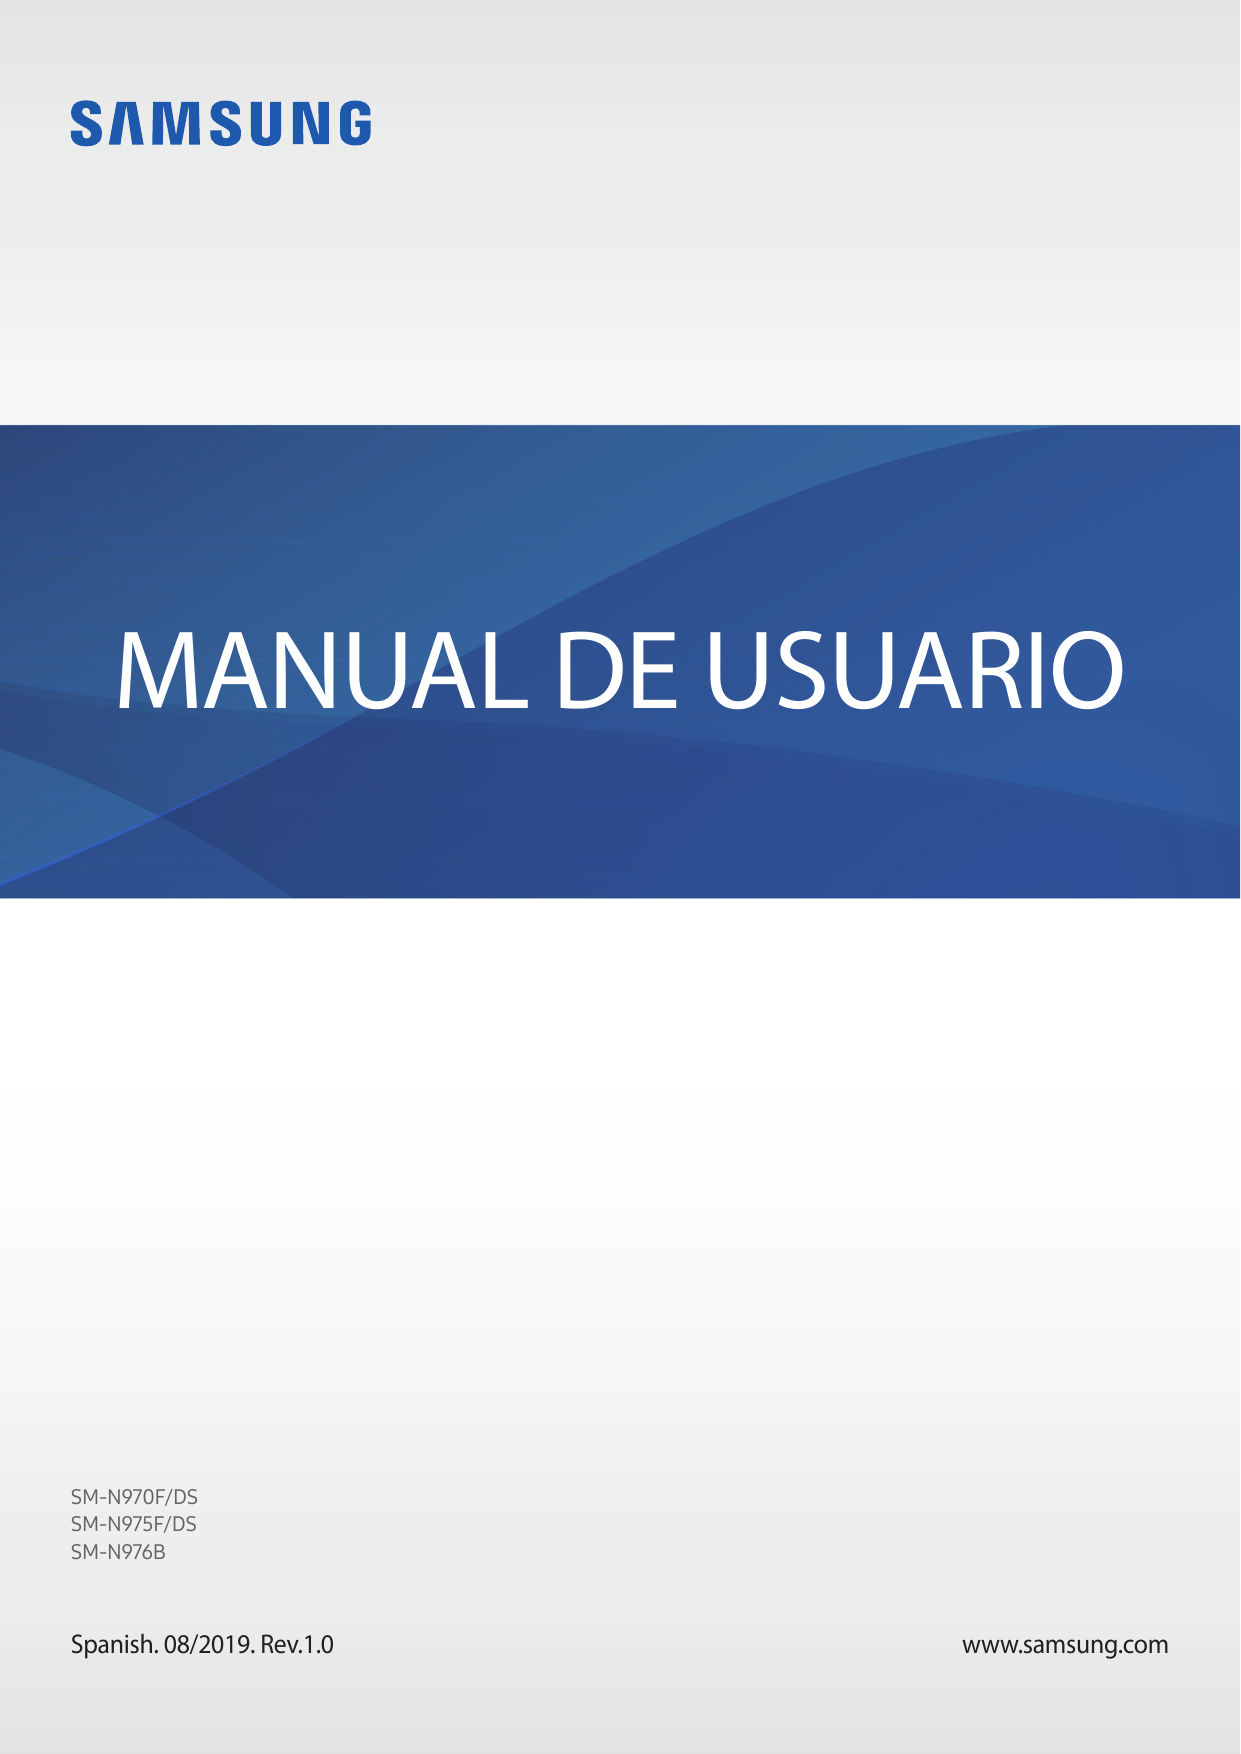 MANUAL DE USUARIOSM-N970F/DSSM-N975F/DSSM-N976BSpanish. 08/2019. Rev.1.0www.samsung.com